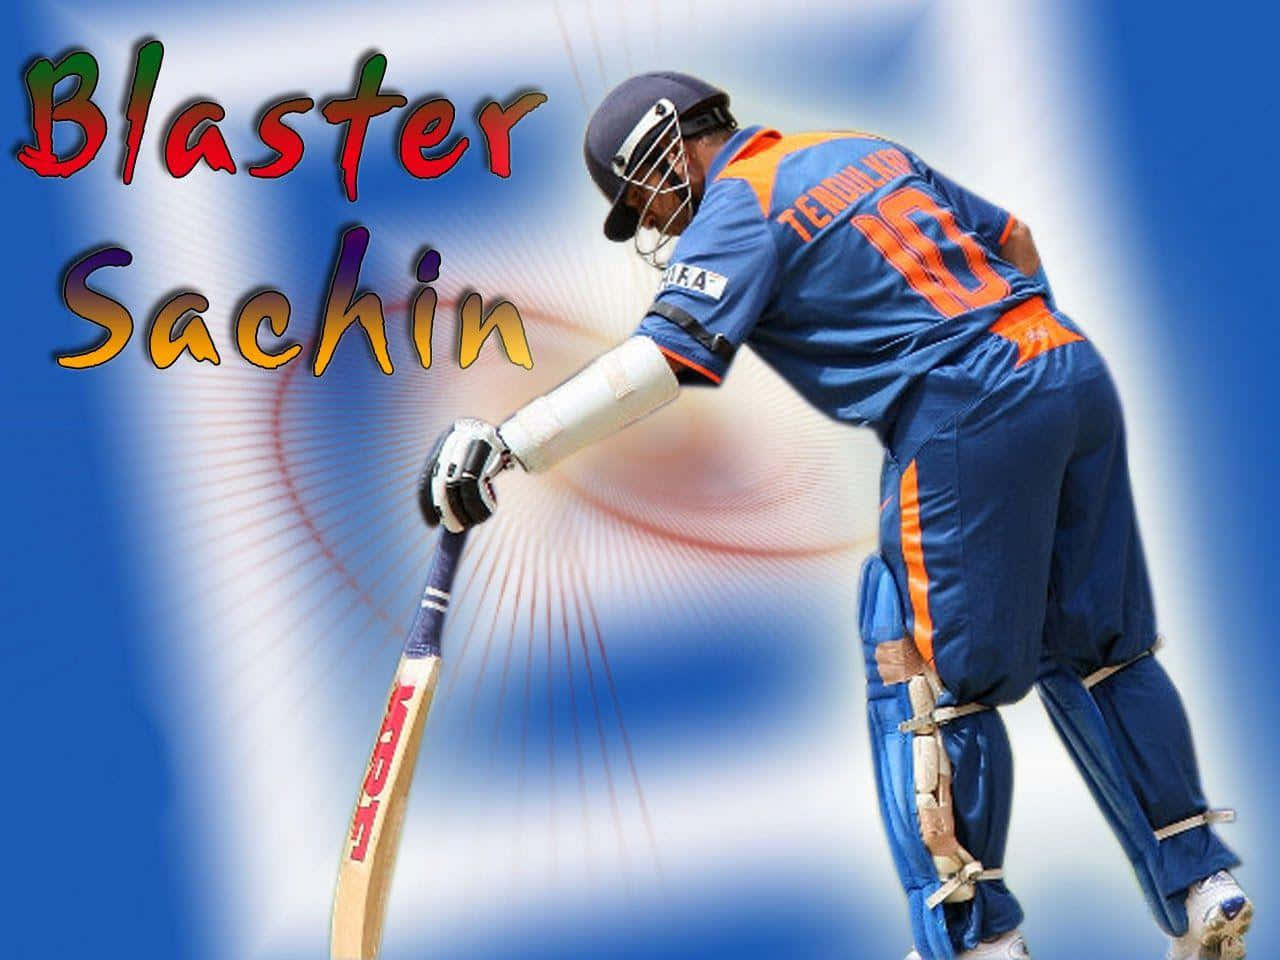 "Legendary Cricketer Sachin Tendulkar in Action" Wallpaper